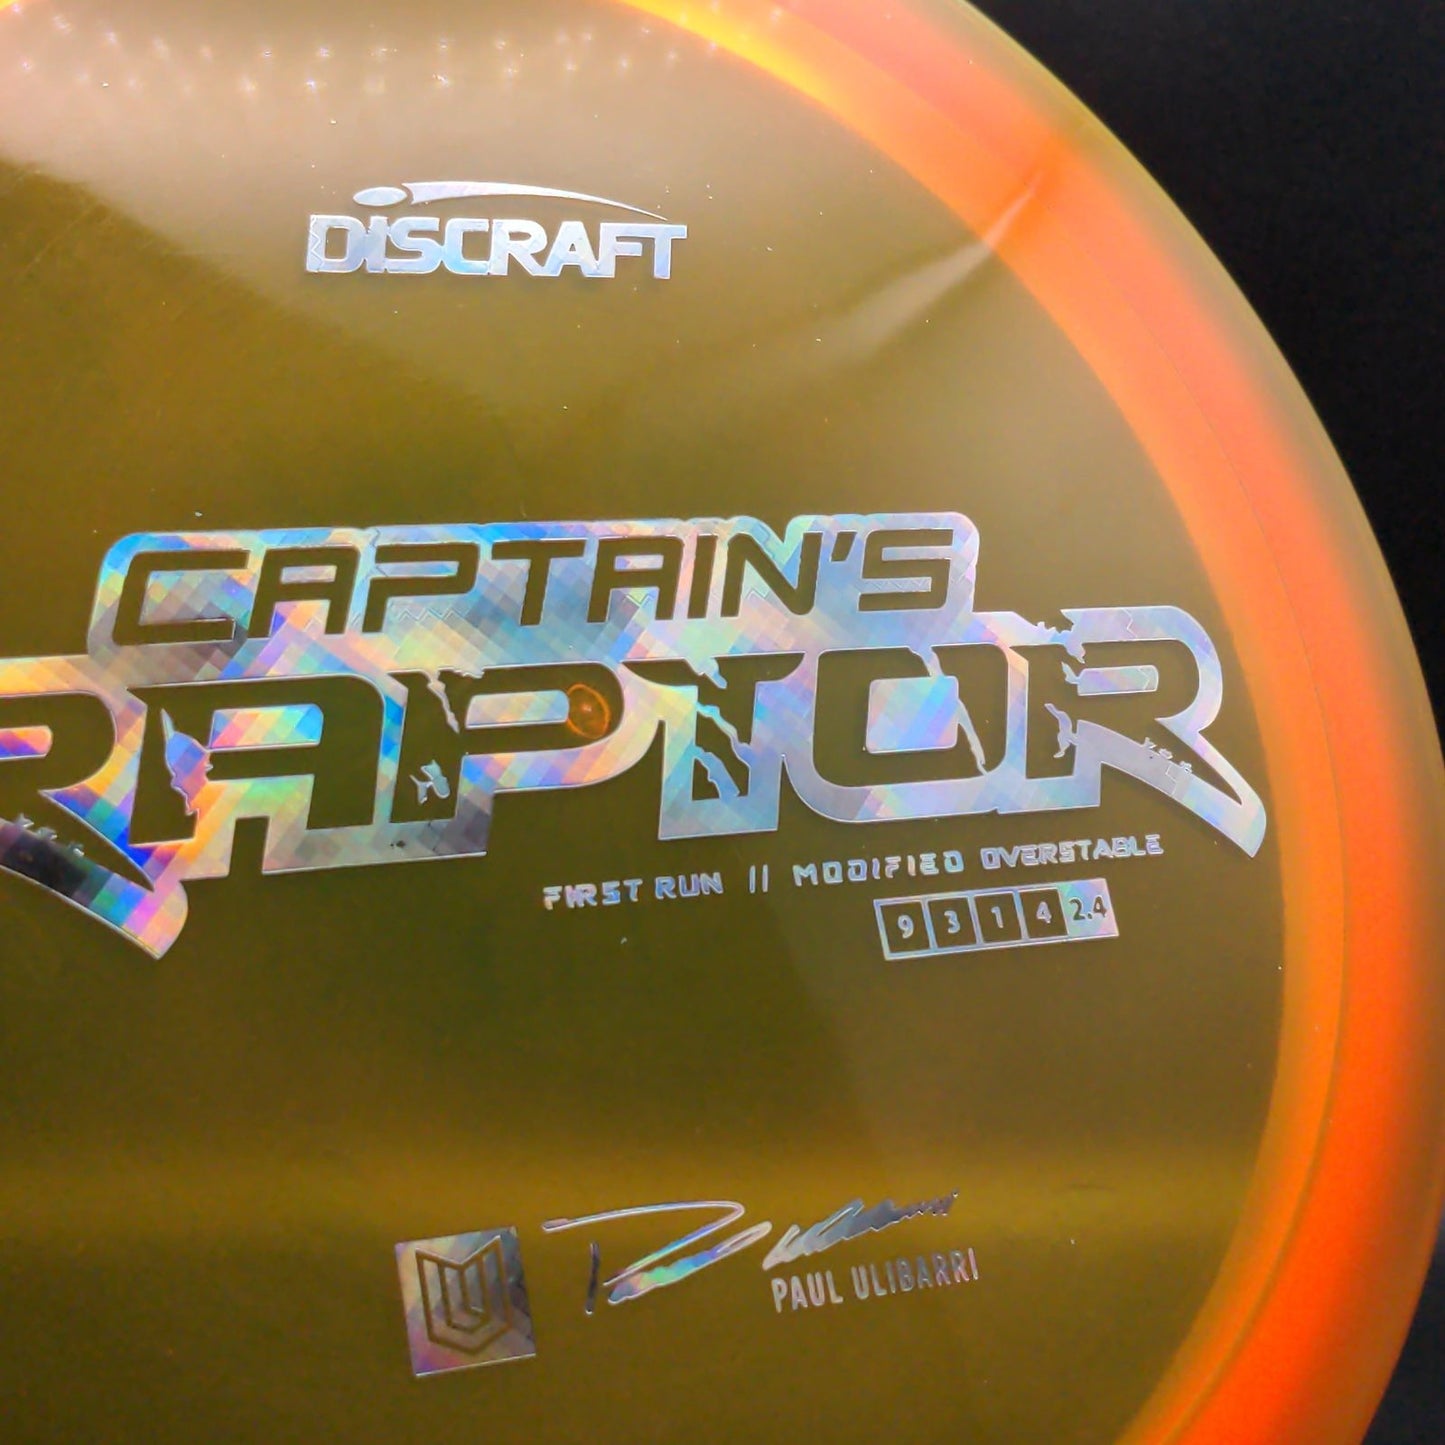 Captain's Raptor - First Run Paul Ulibarri - Neon Orange Discraft